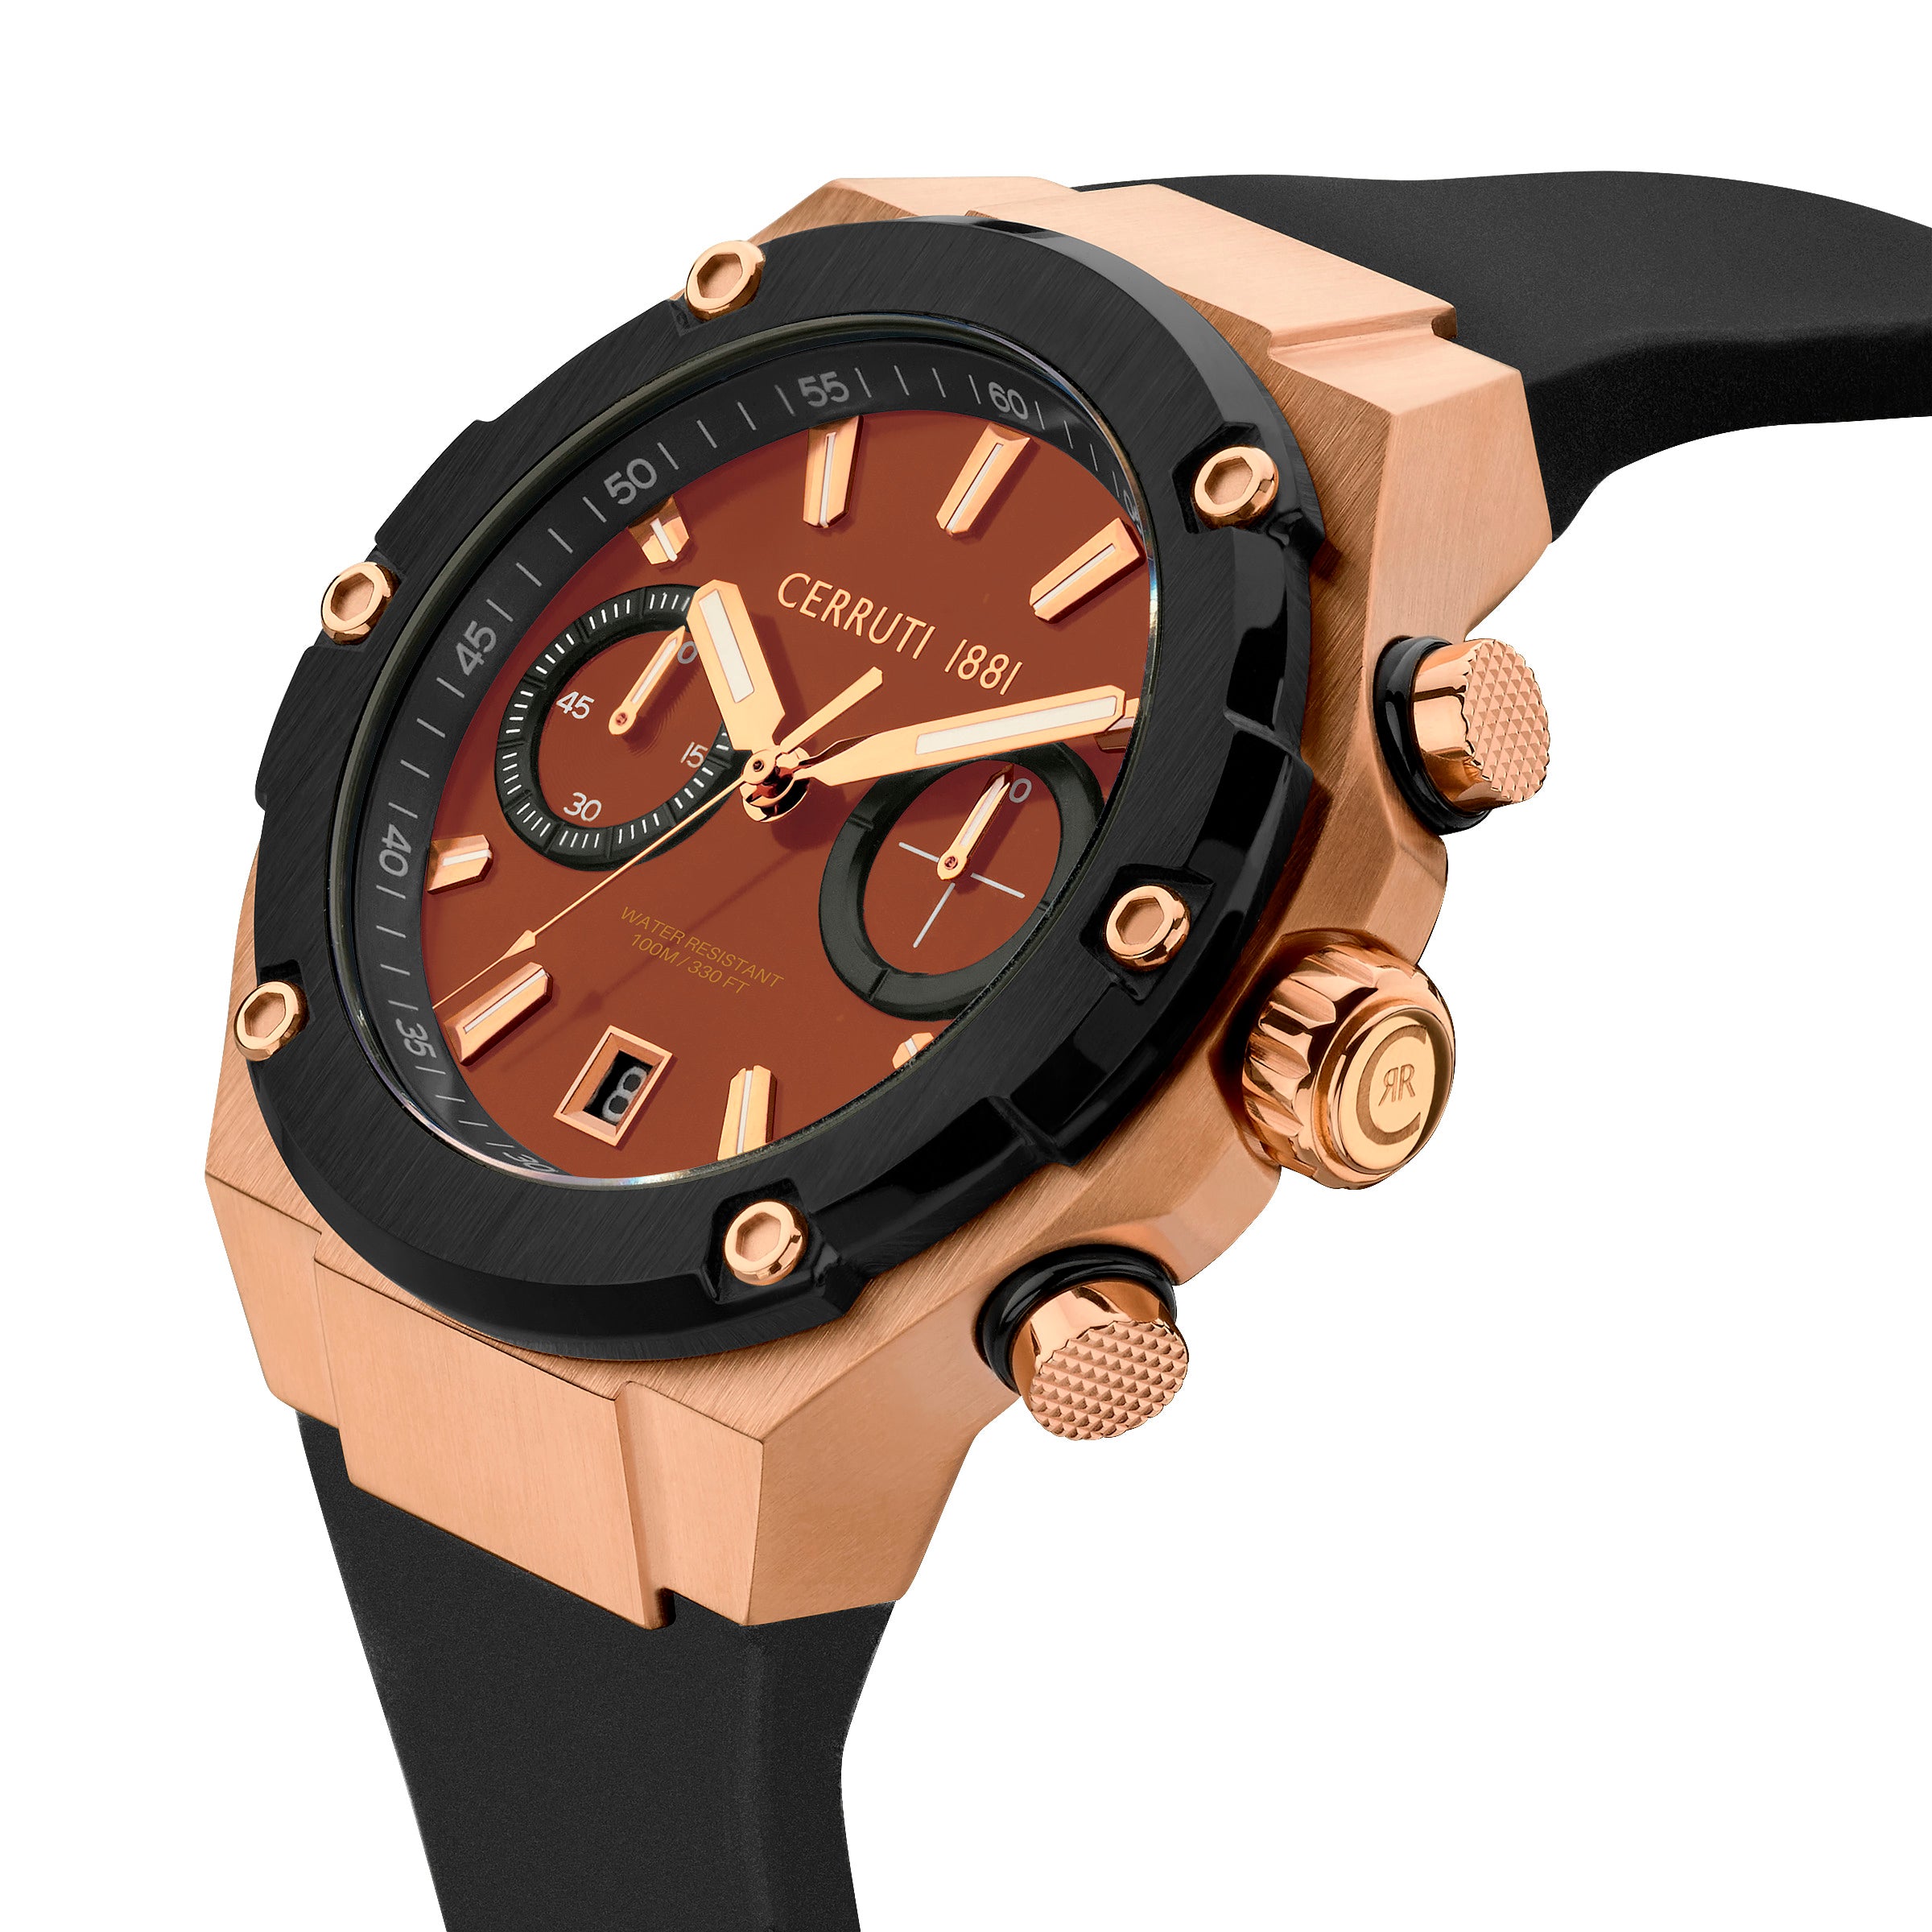 Cerruti Men's Quartz Watch, Brown Dial - CER-0494